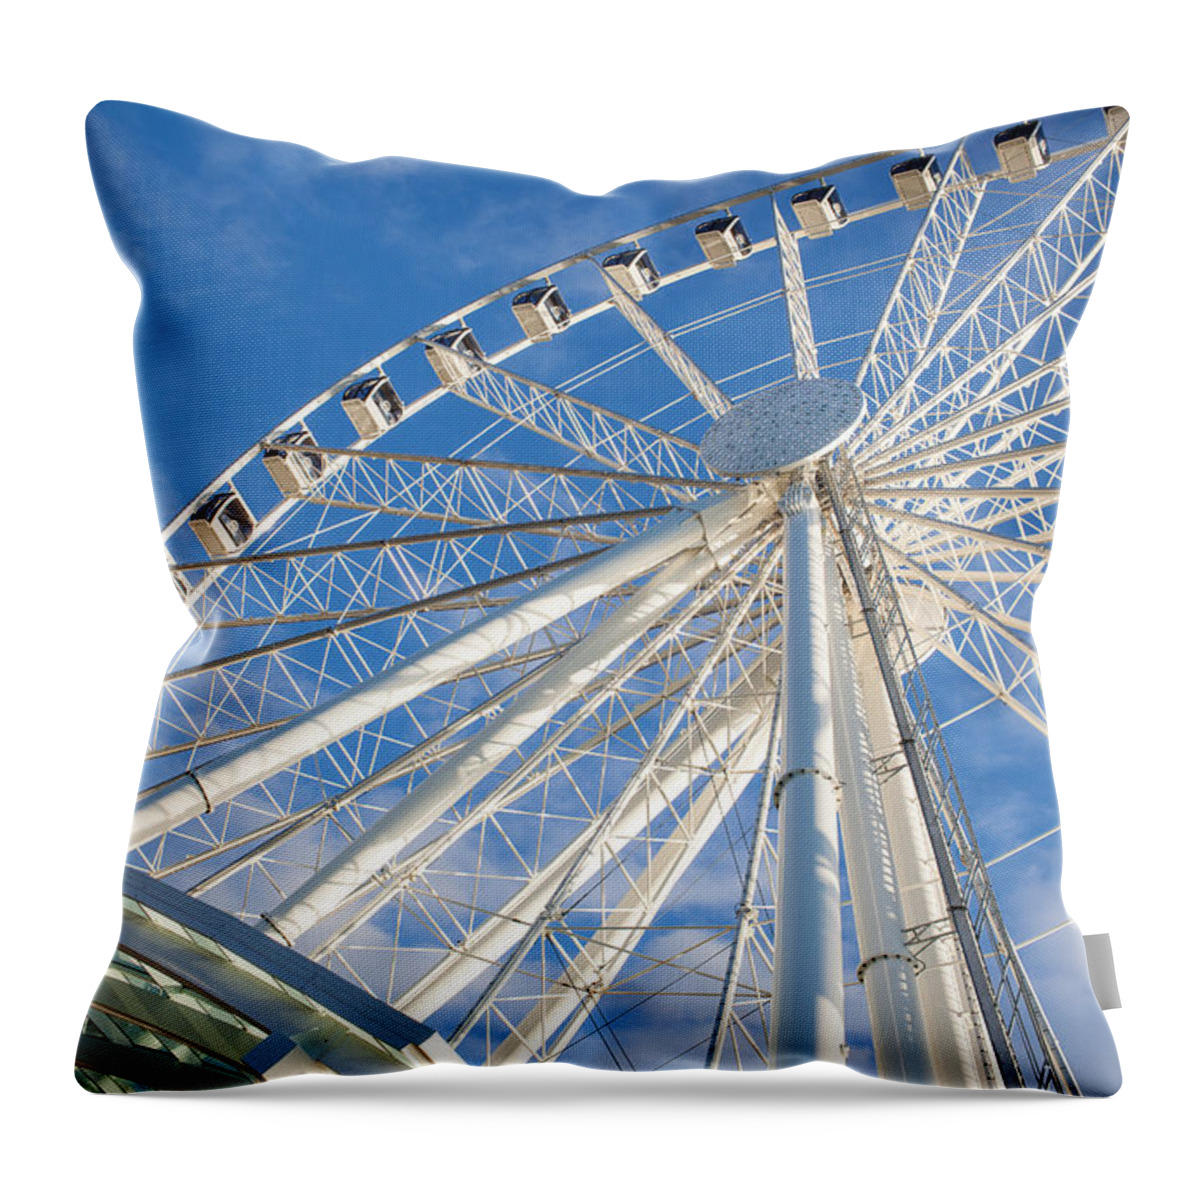 Seattle Throw Pillow featuring the photograph Seattle Ferris Wheel by Paul Bartoszek